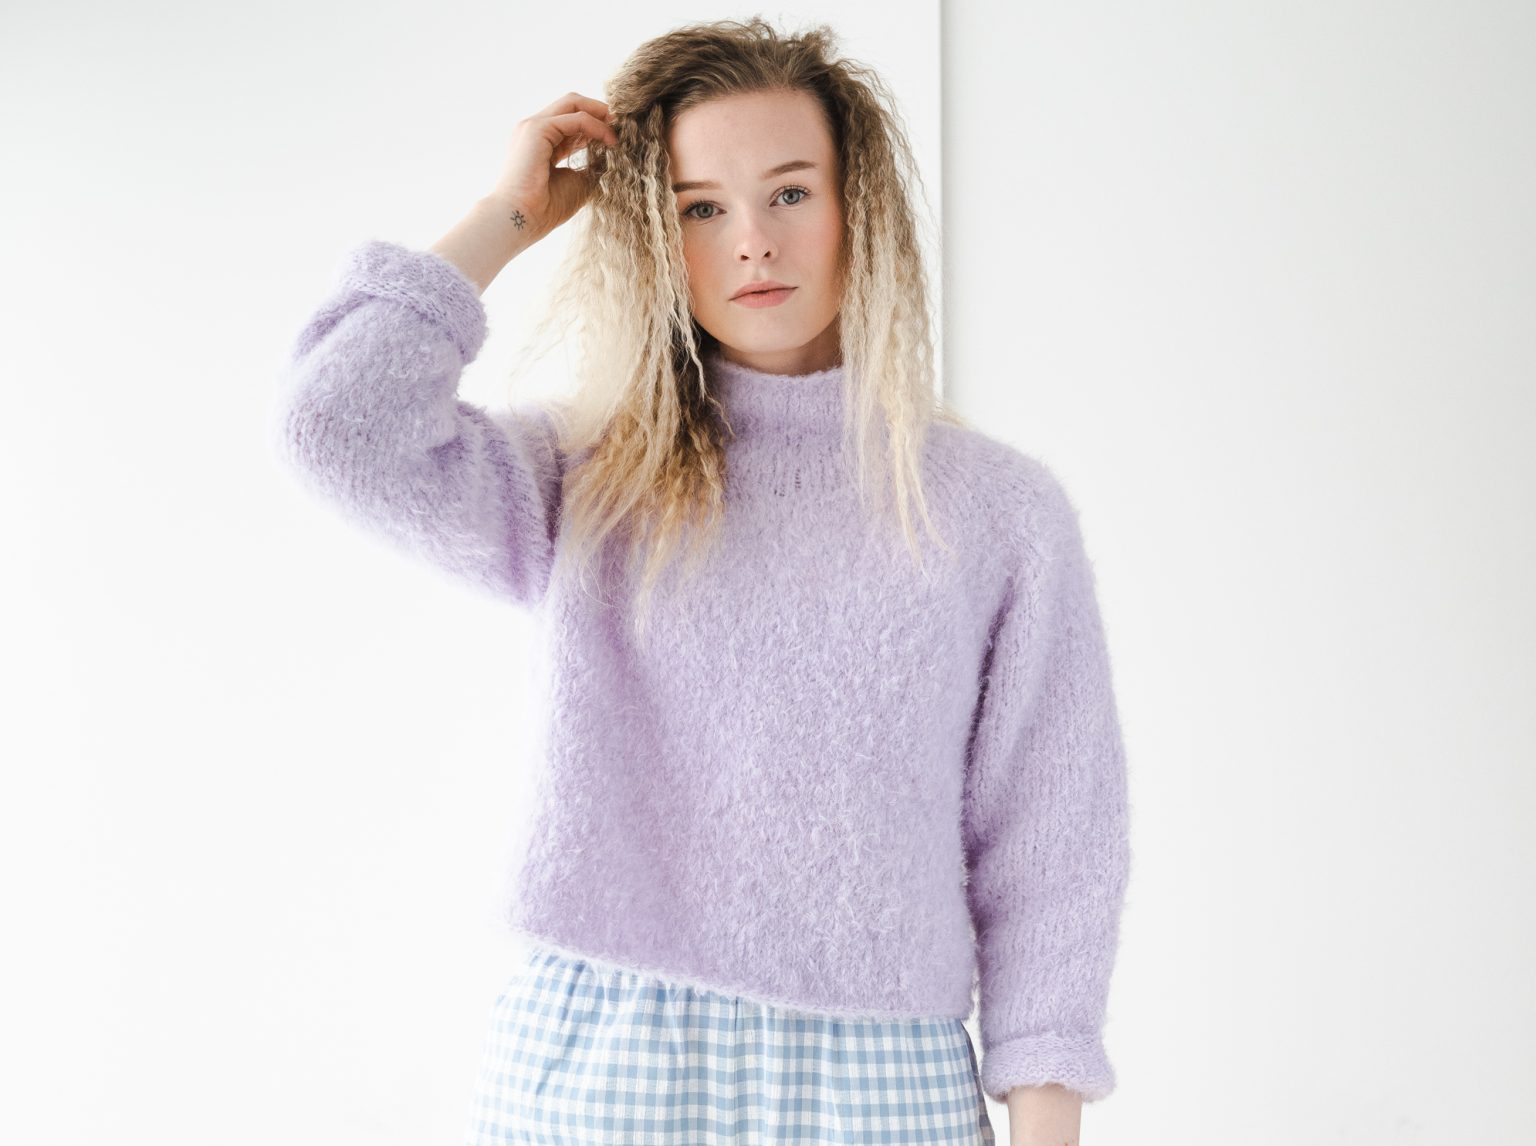 Wild sweater | Turtleneck sweater women | Knitting pattern - by HipKnitShop